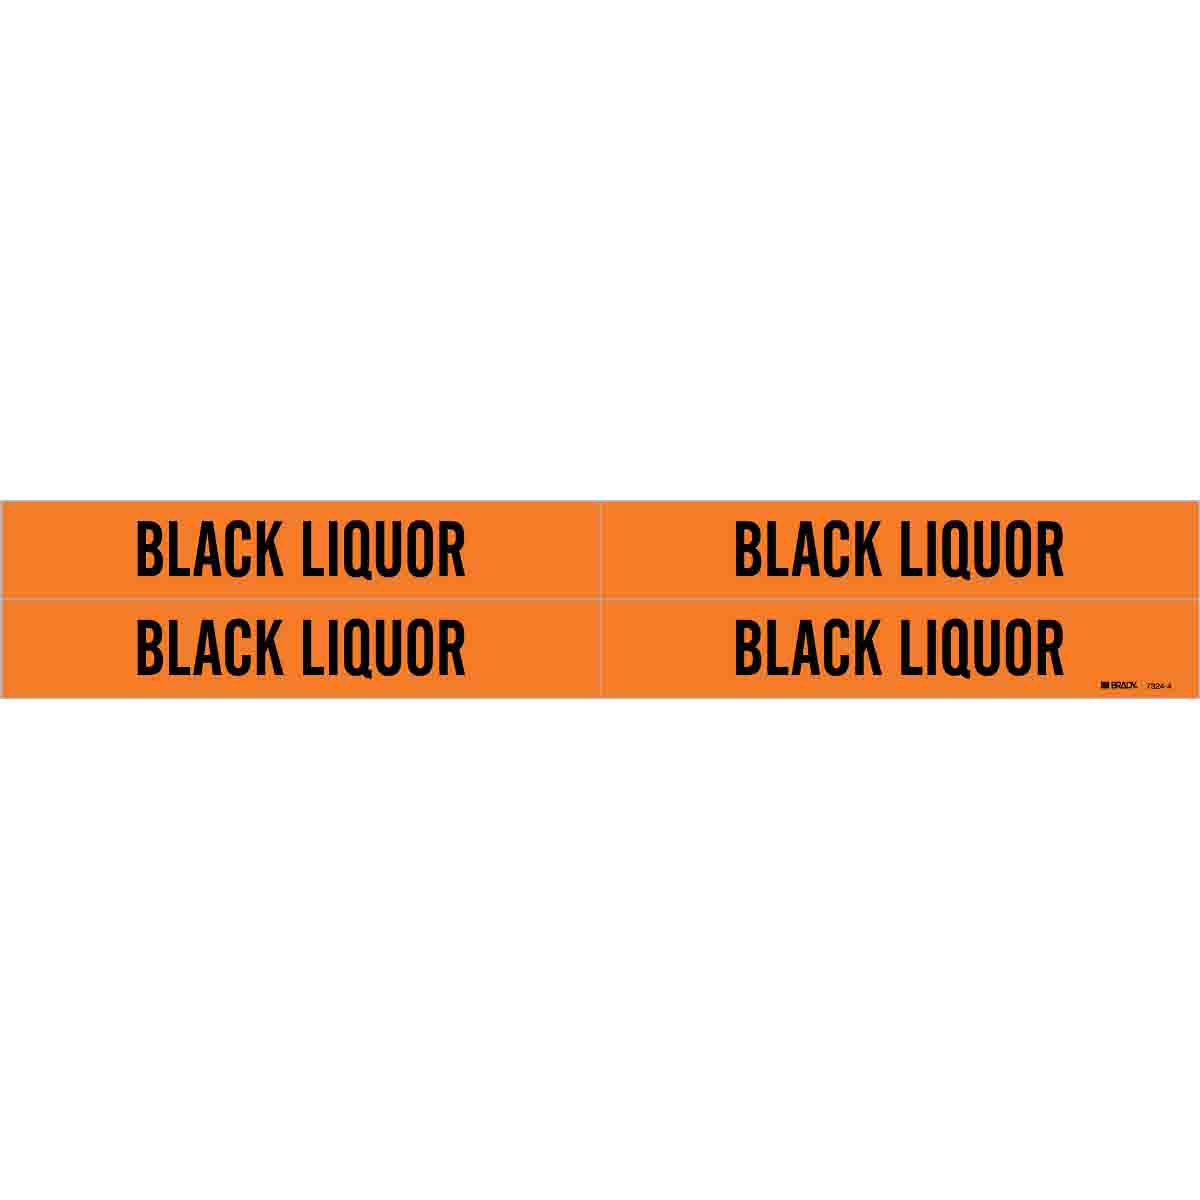 BLACK LIQUOR BLACK / ORANGE